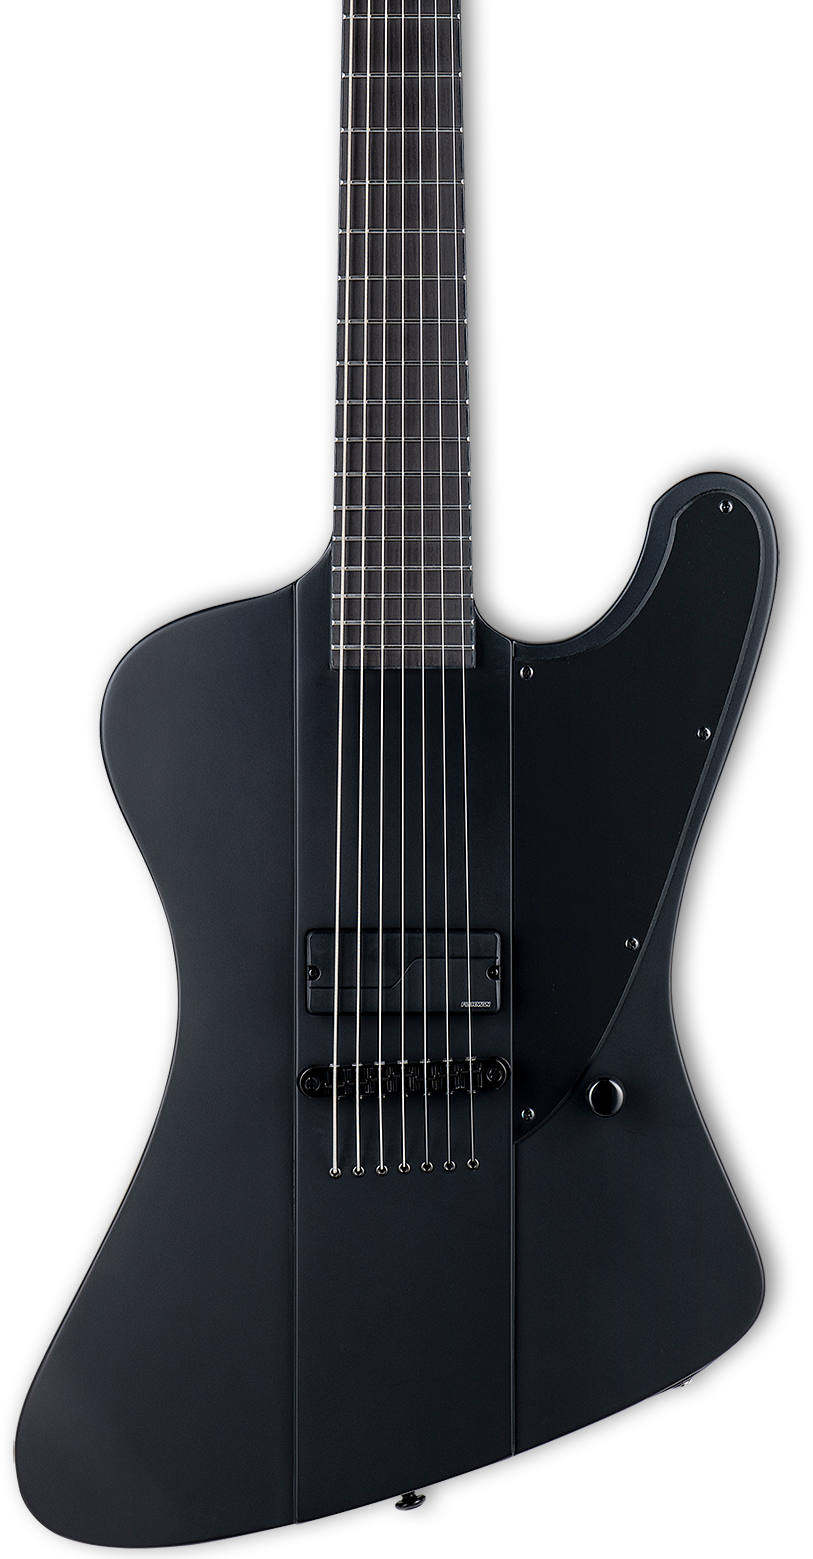 ESP LTD Phoenix-7 Baritone Black Metal Electric Guitar - Black Satin